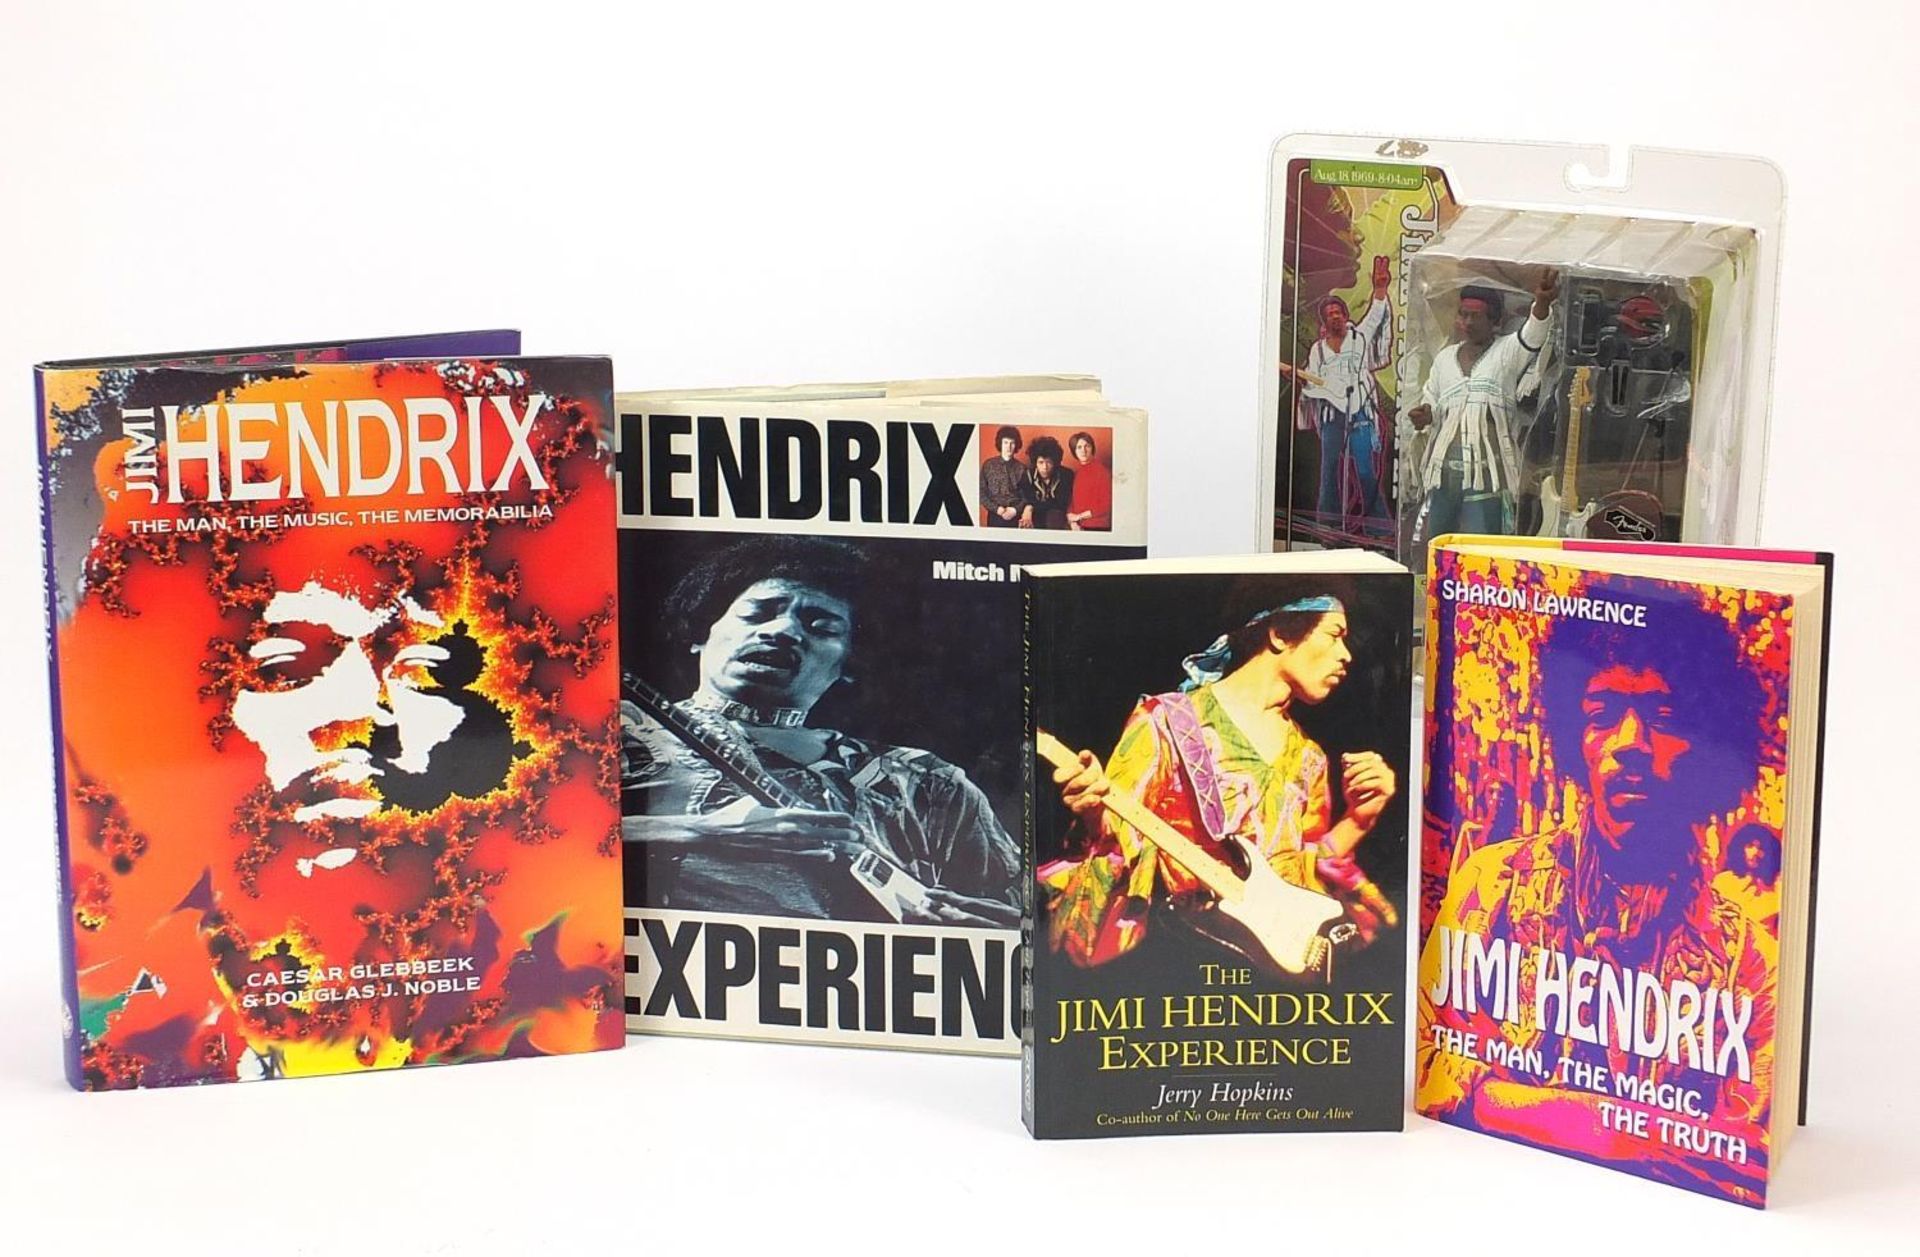 Jimi Hendrix memorabilia including a Spawn action figure and hardback books